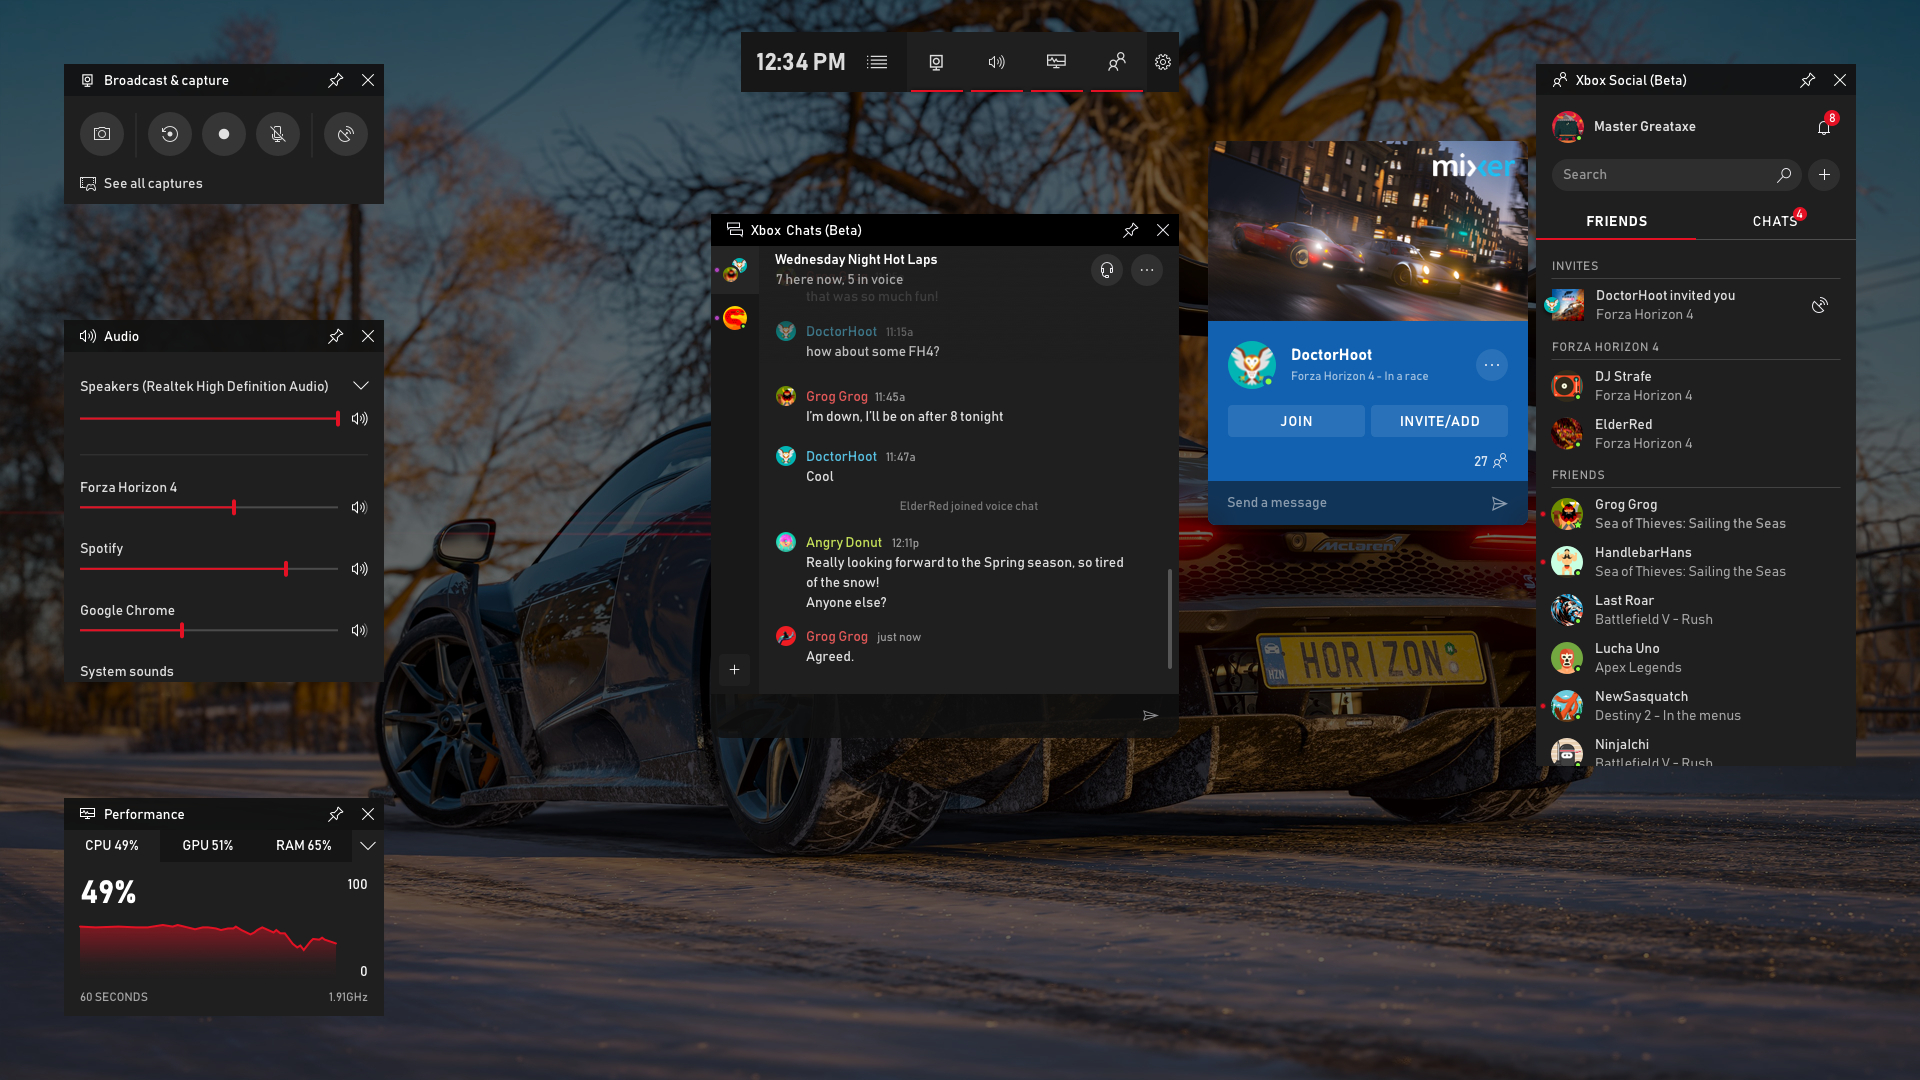 Microsoft's Xbox Game Bar is getting custom widgets and its own